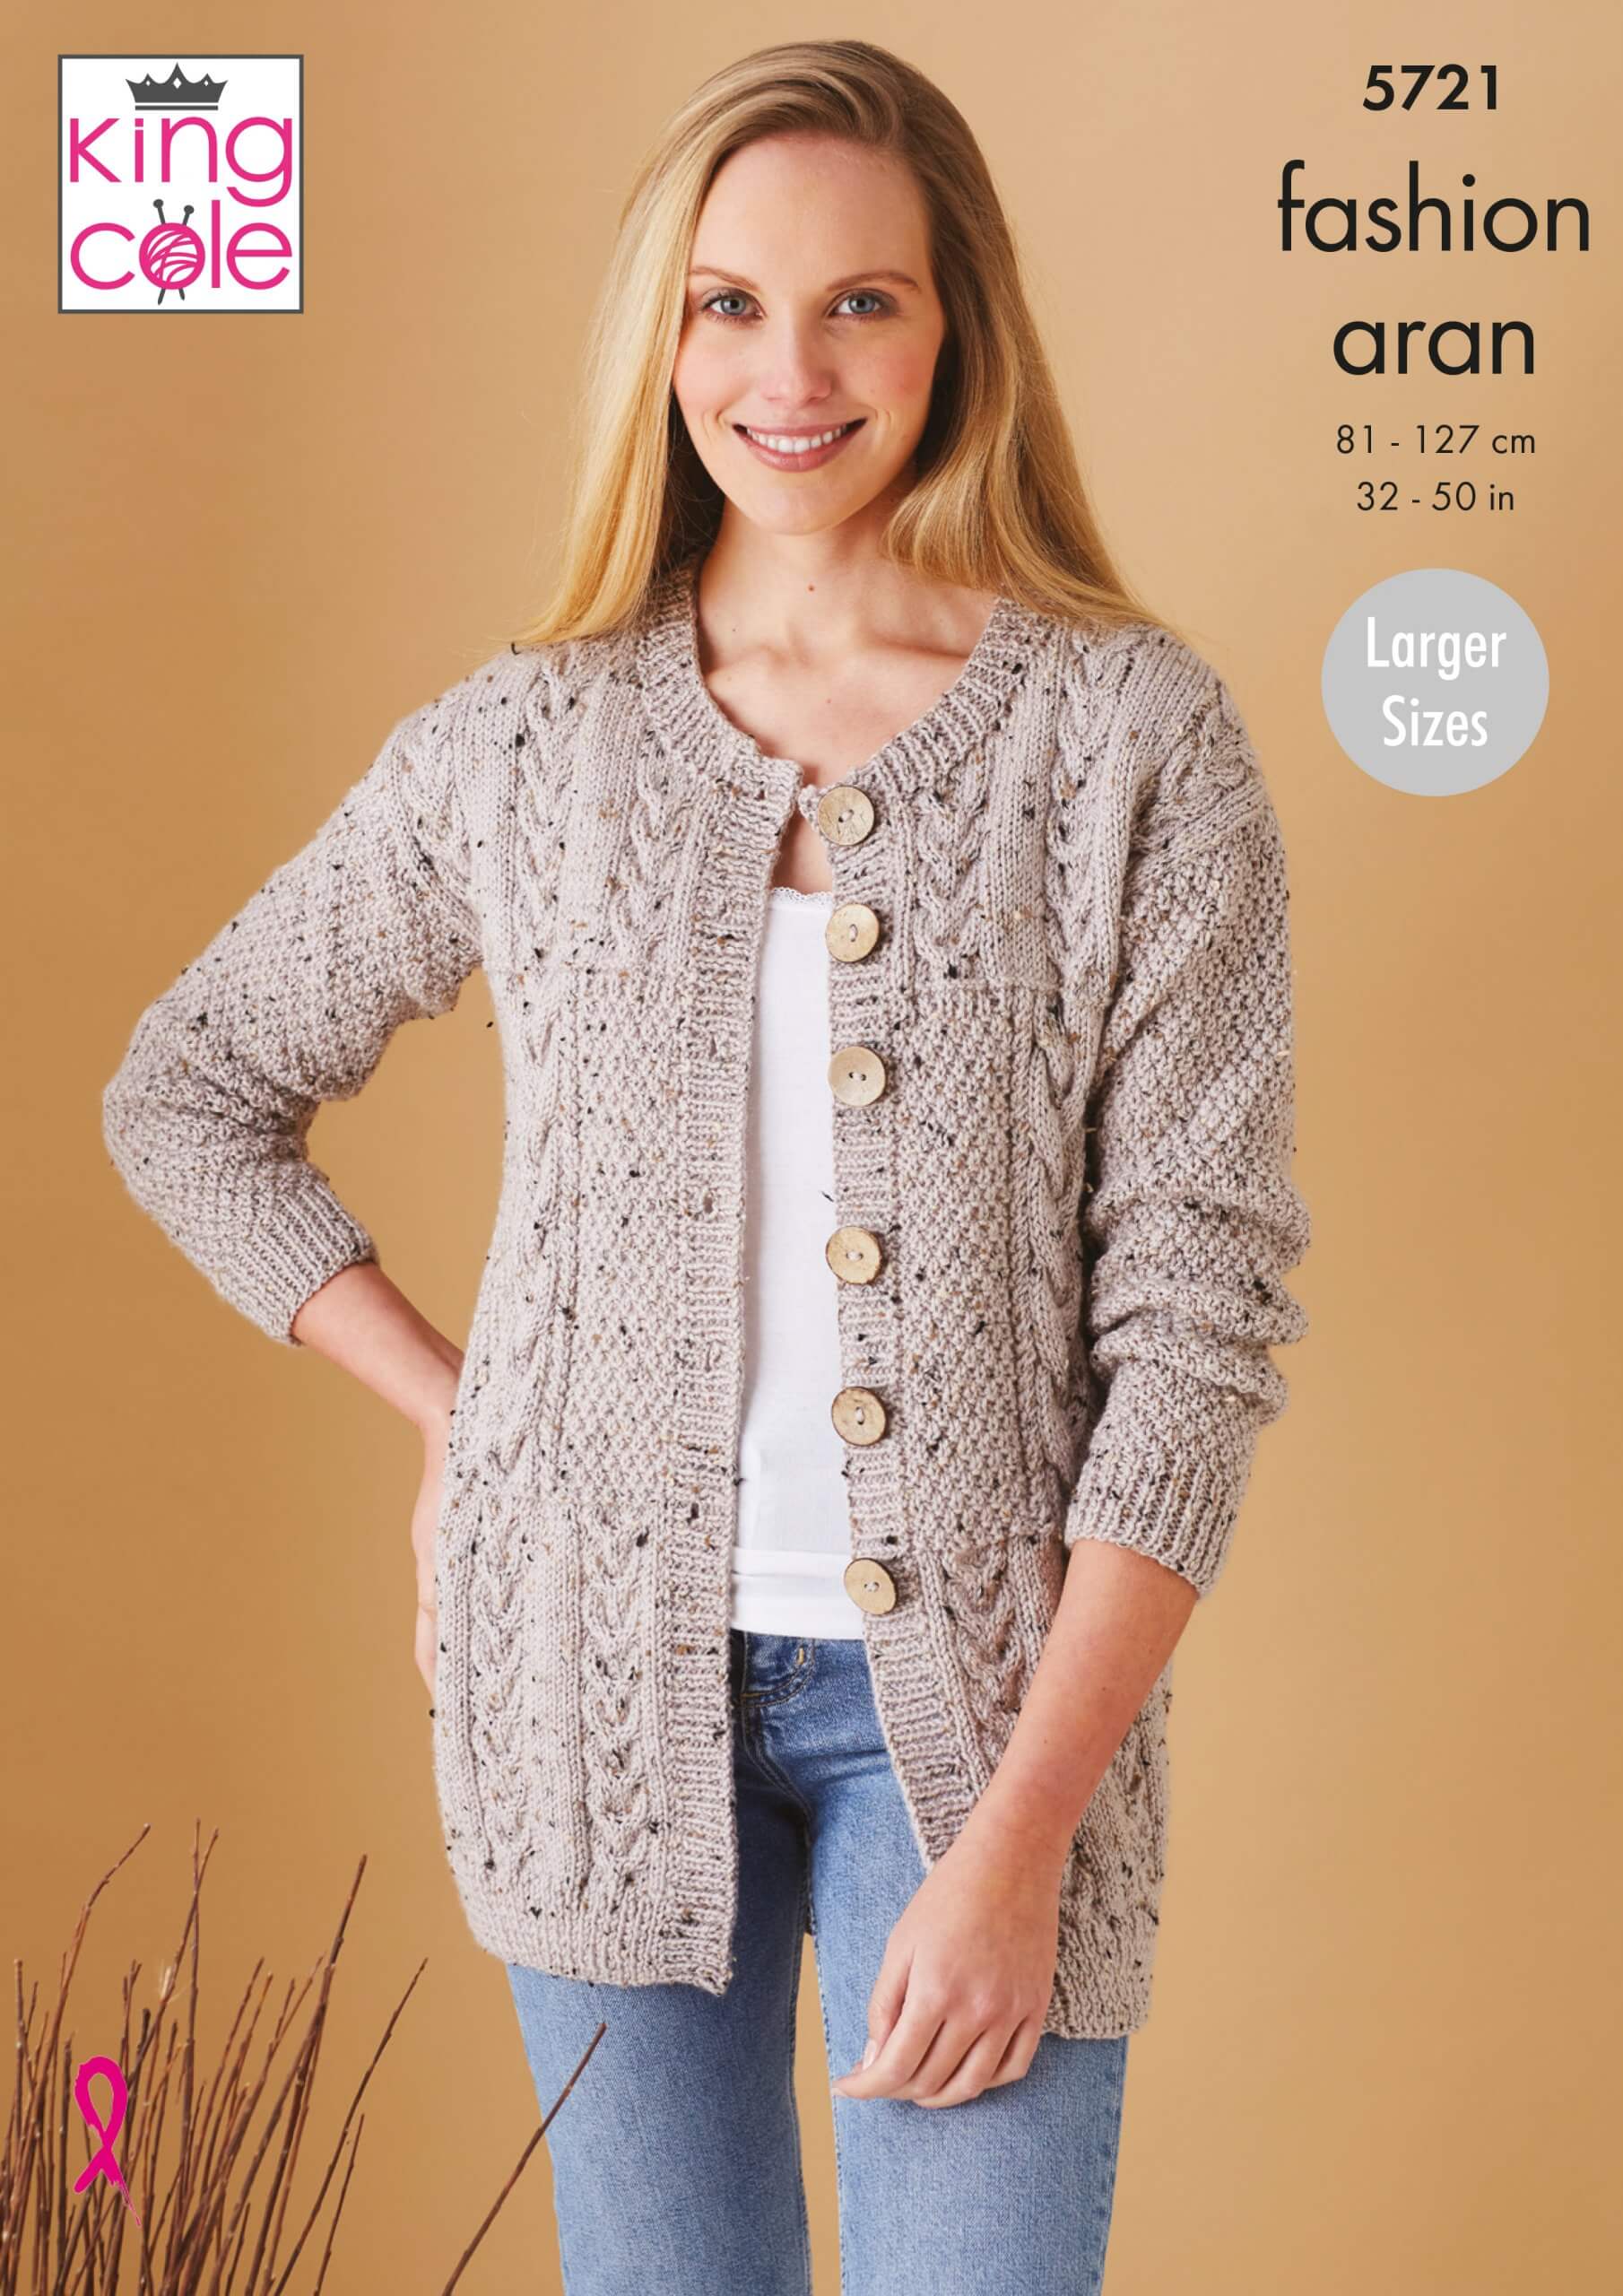 Easy to Follow Waistcoat & Jacket Knitted in Fashion Aran Knitting